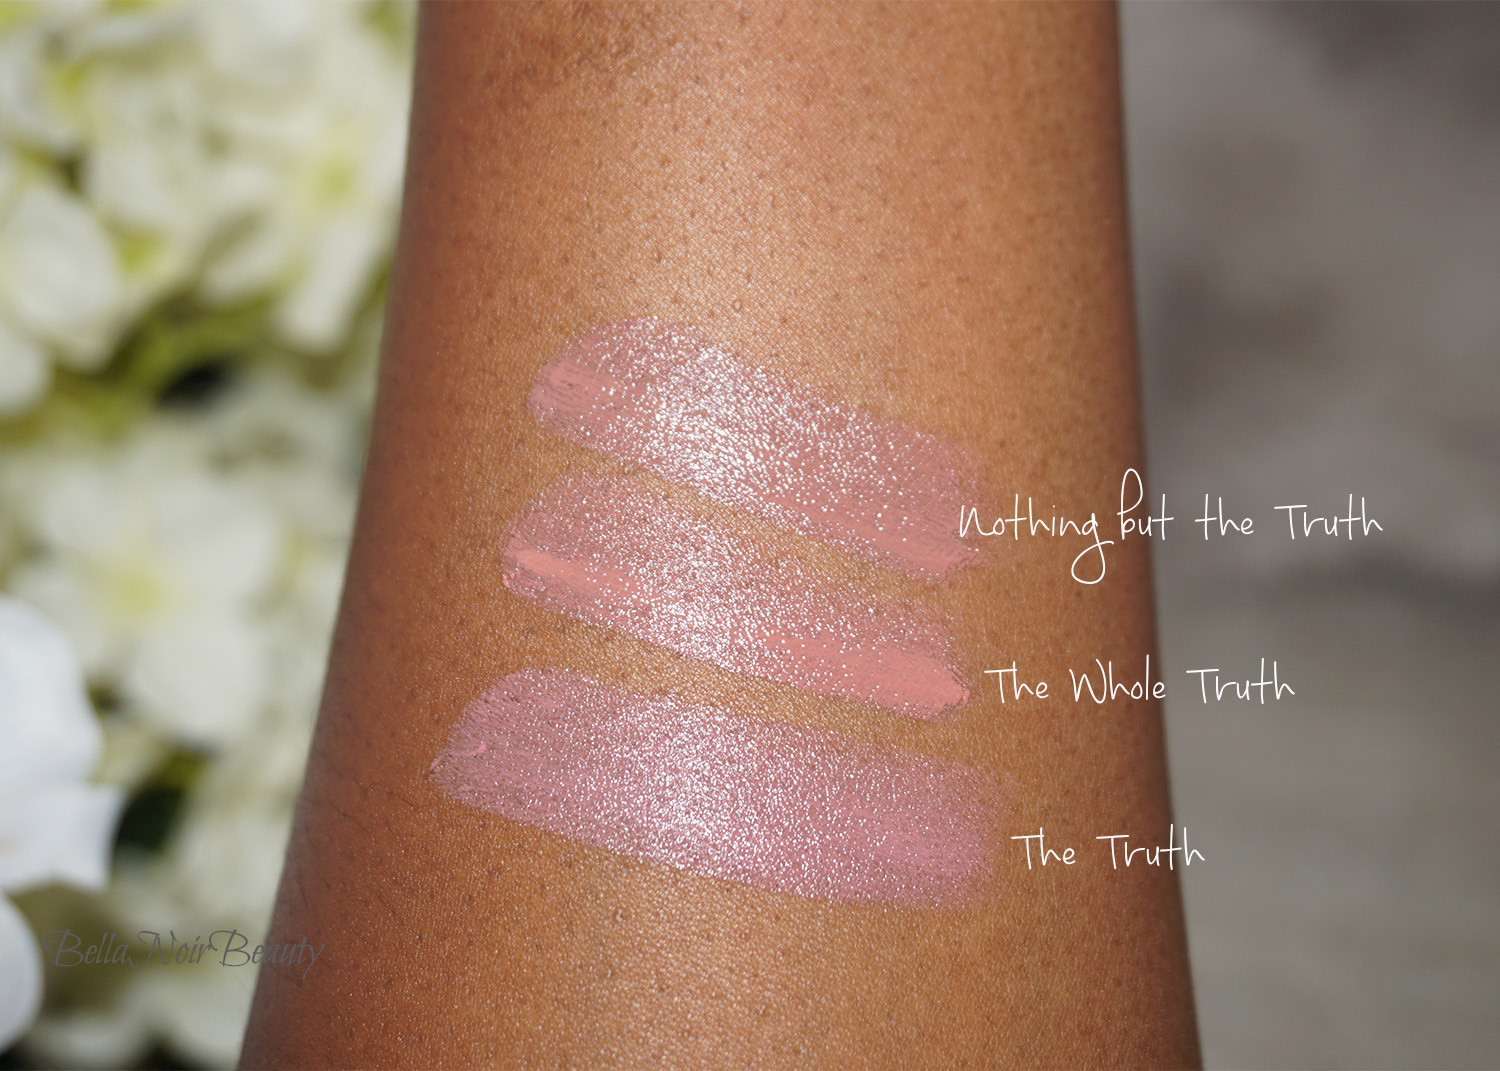 Lipstick Queen Nothing but the Nudes Lipsticks | bellanoirbeauty.com